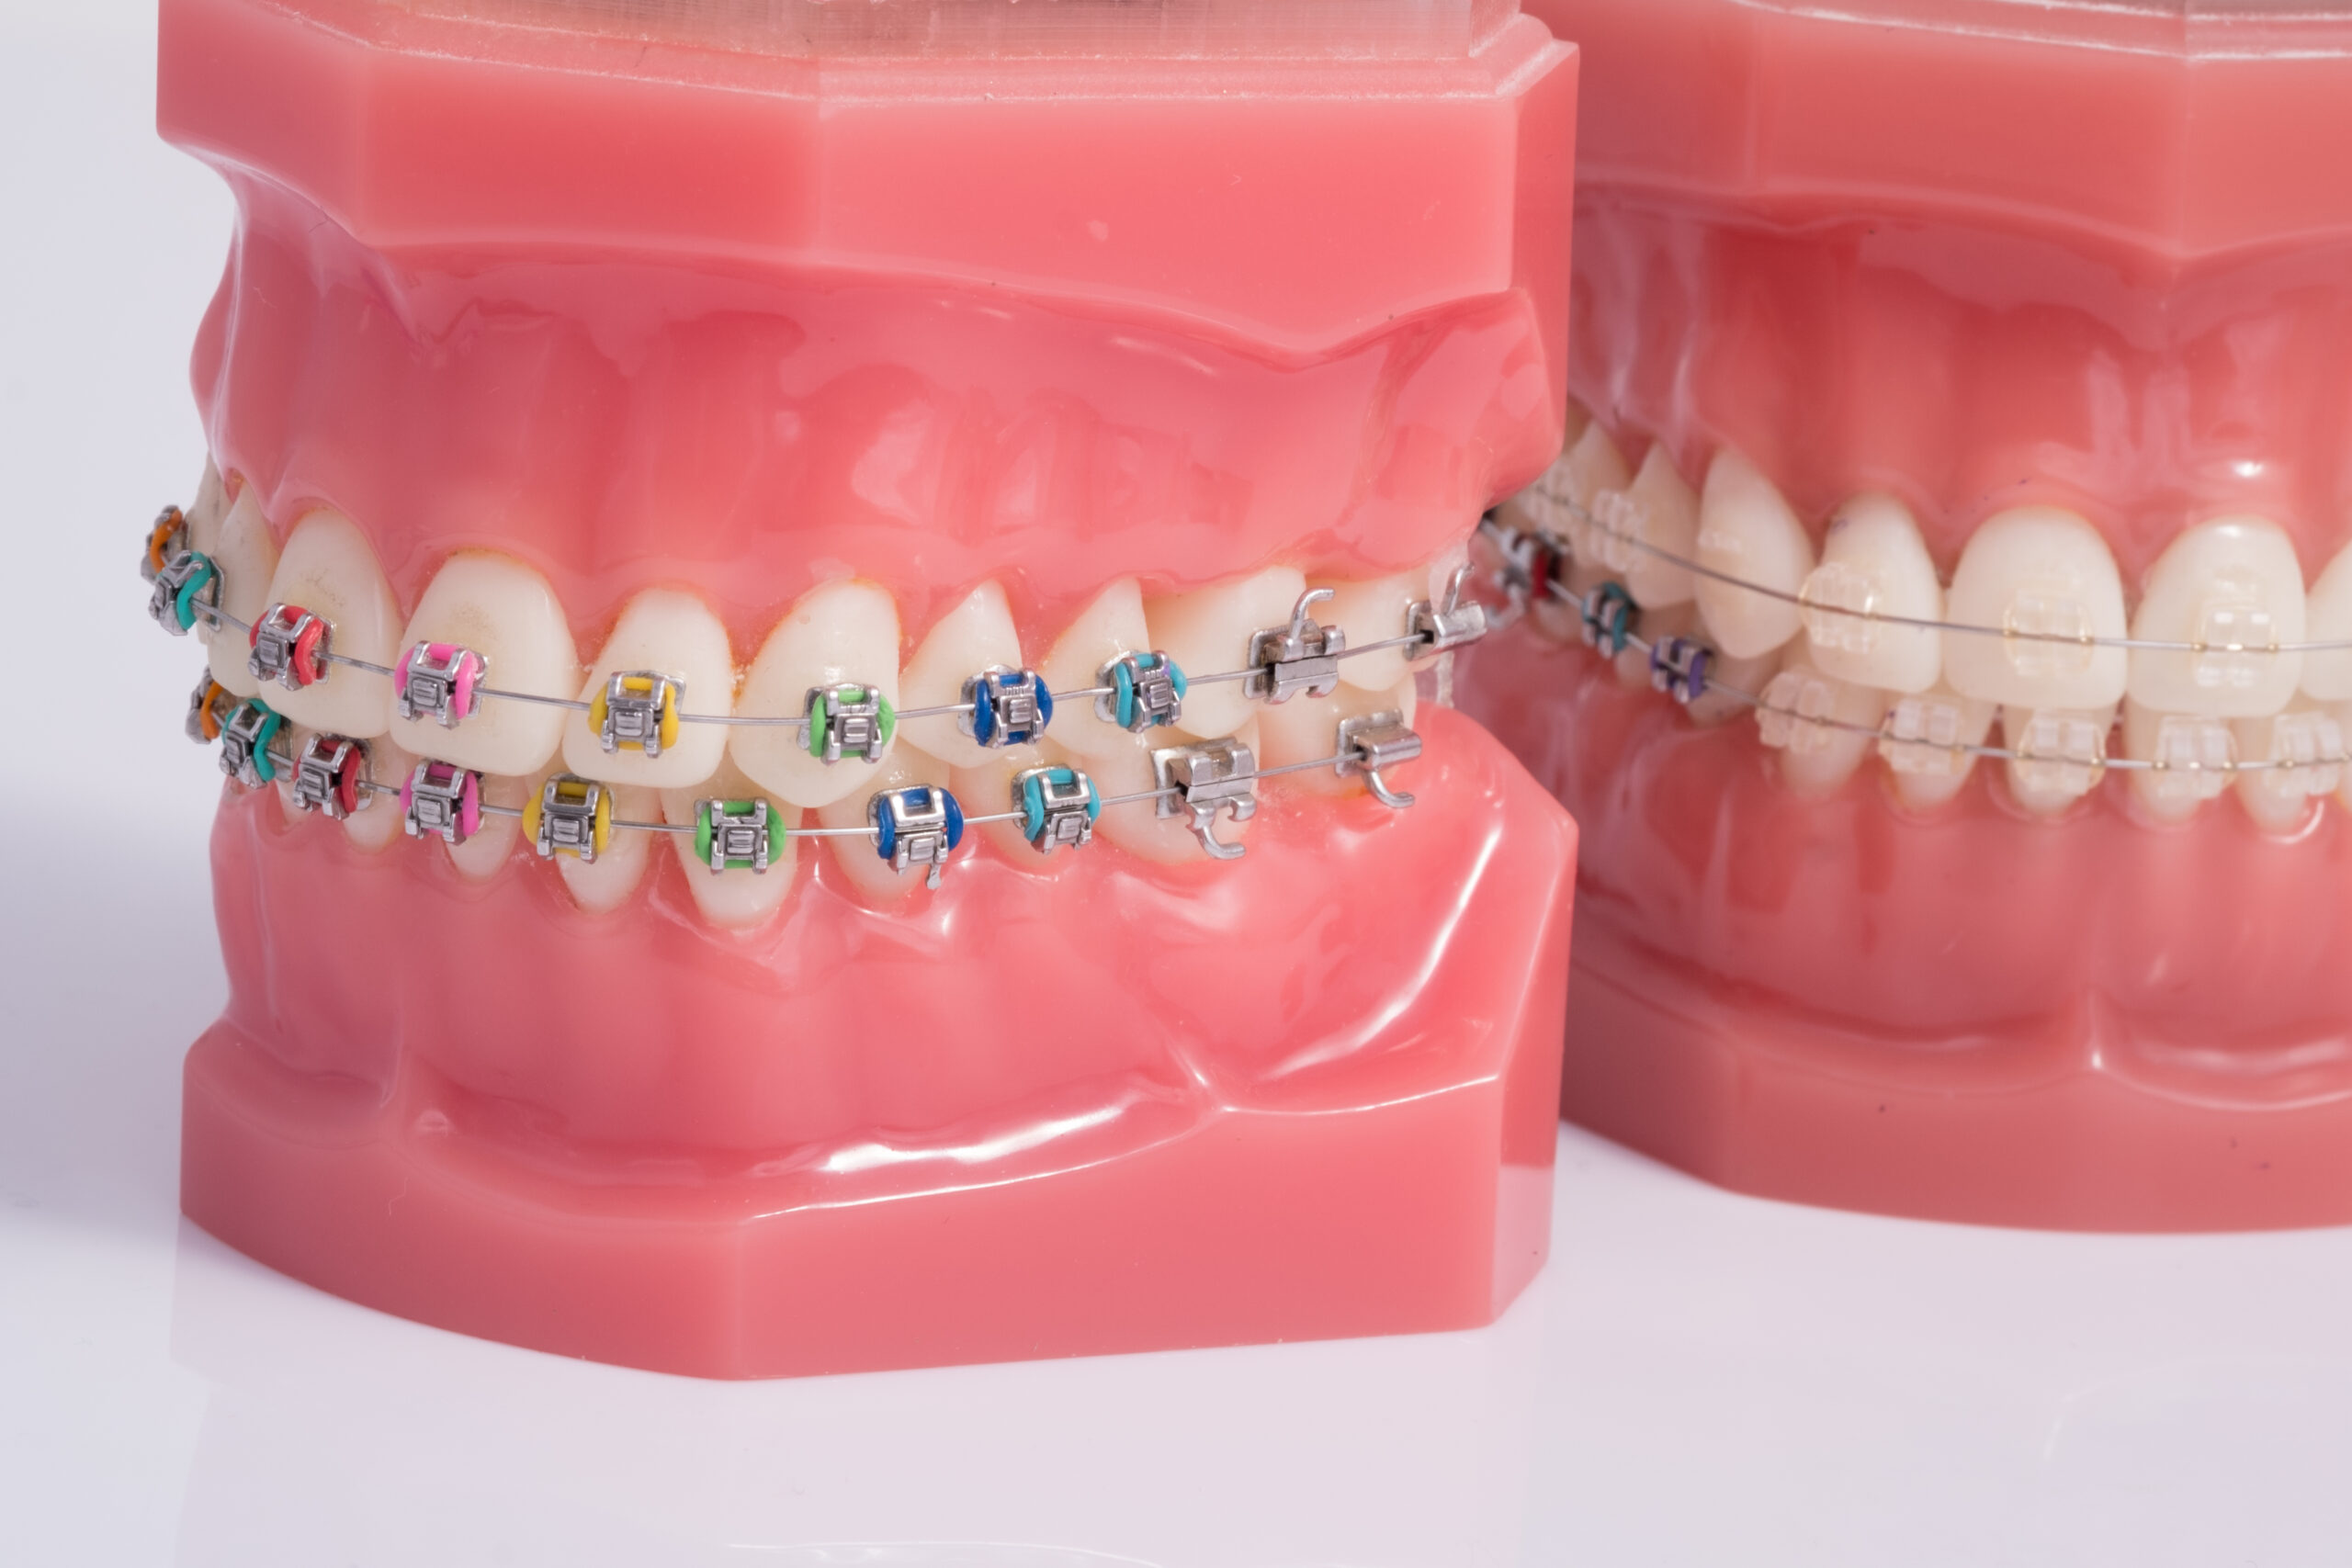 Dentist,Demonstration,Teeth,Model,Of,Orthodontic,Bracket,Or,Brace,With